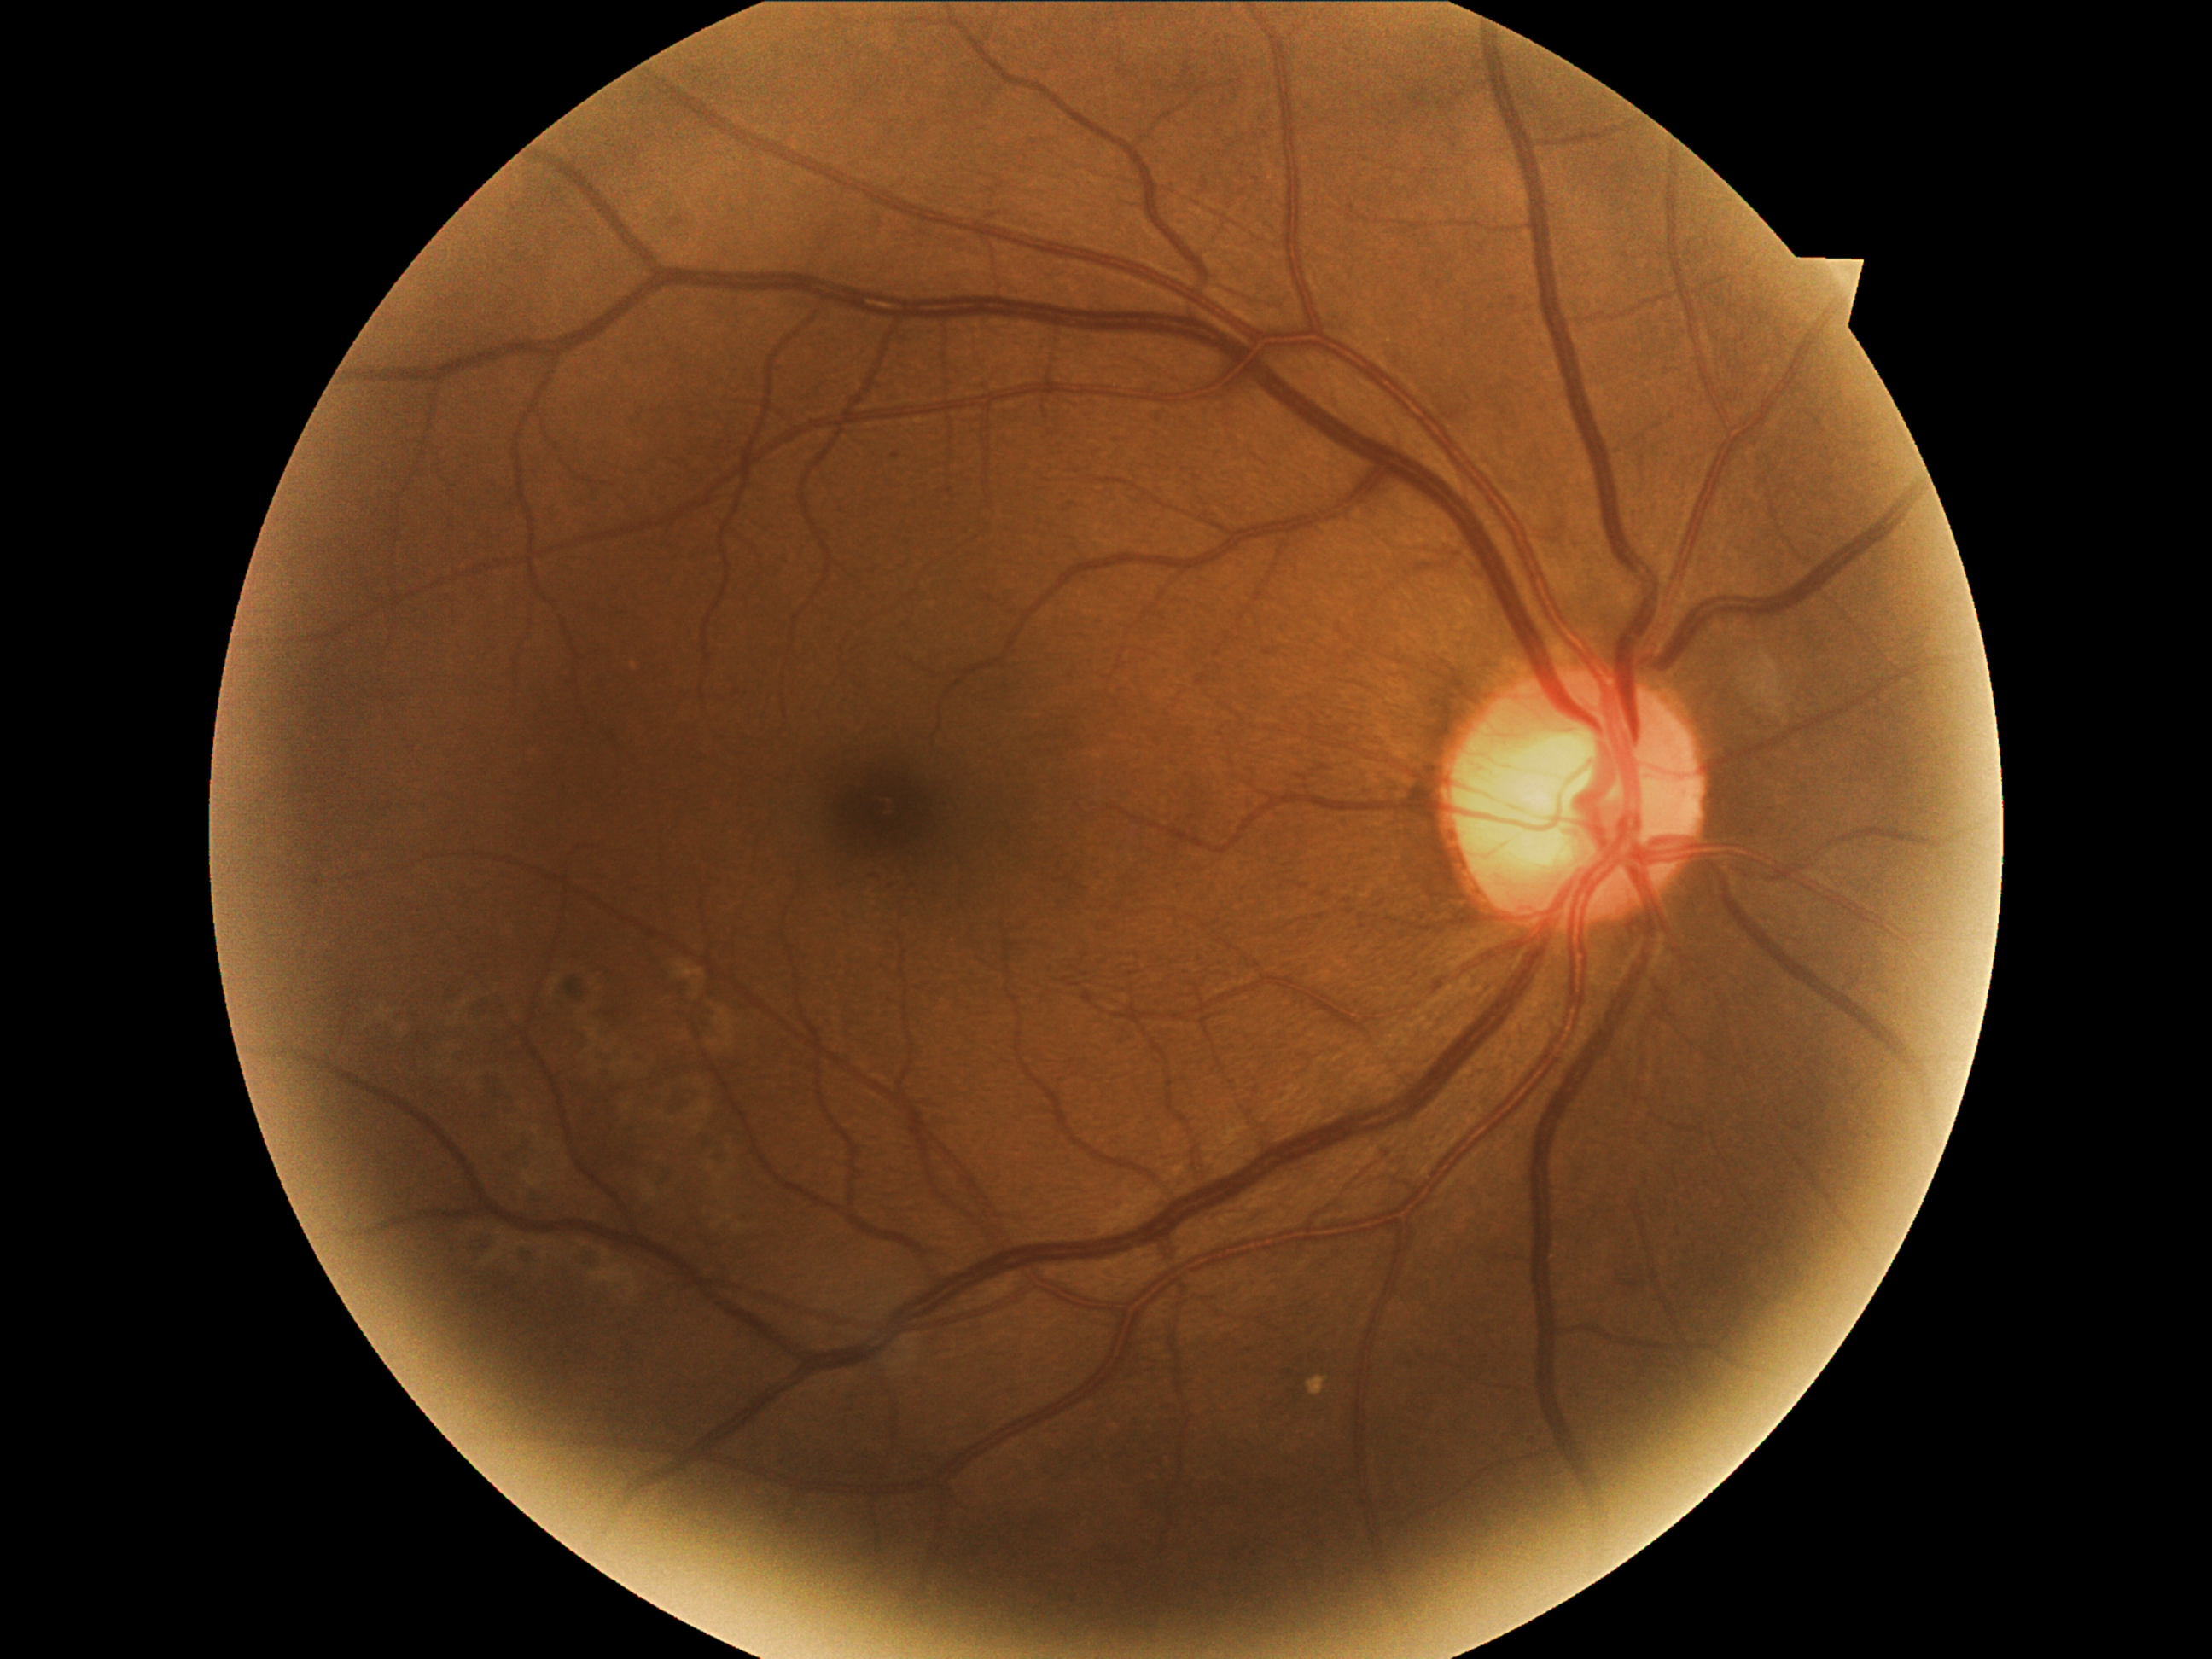 A retinal image